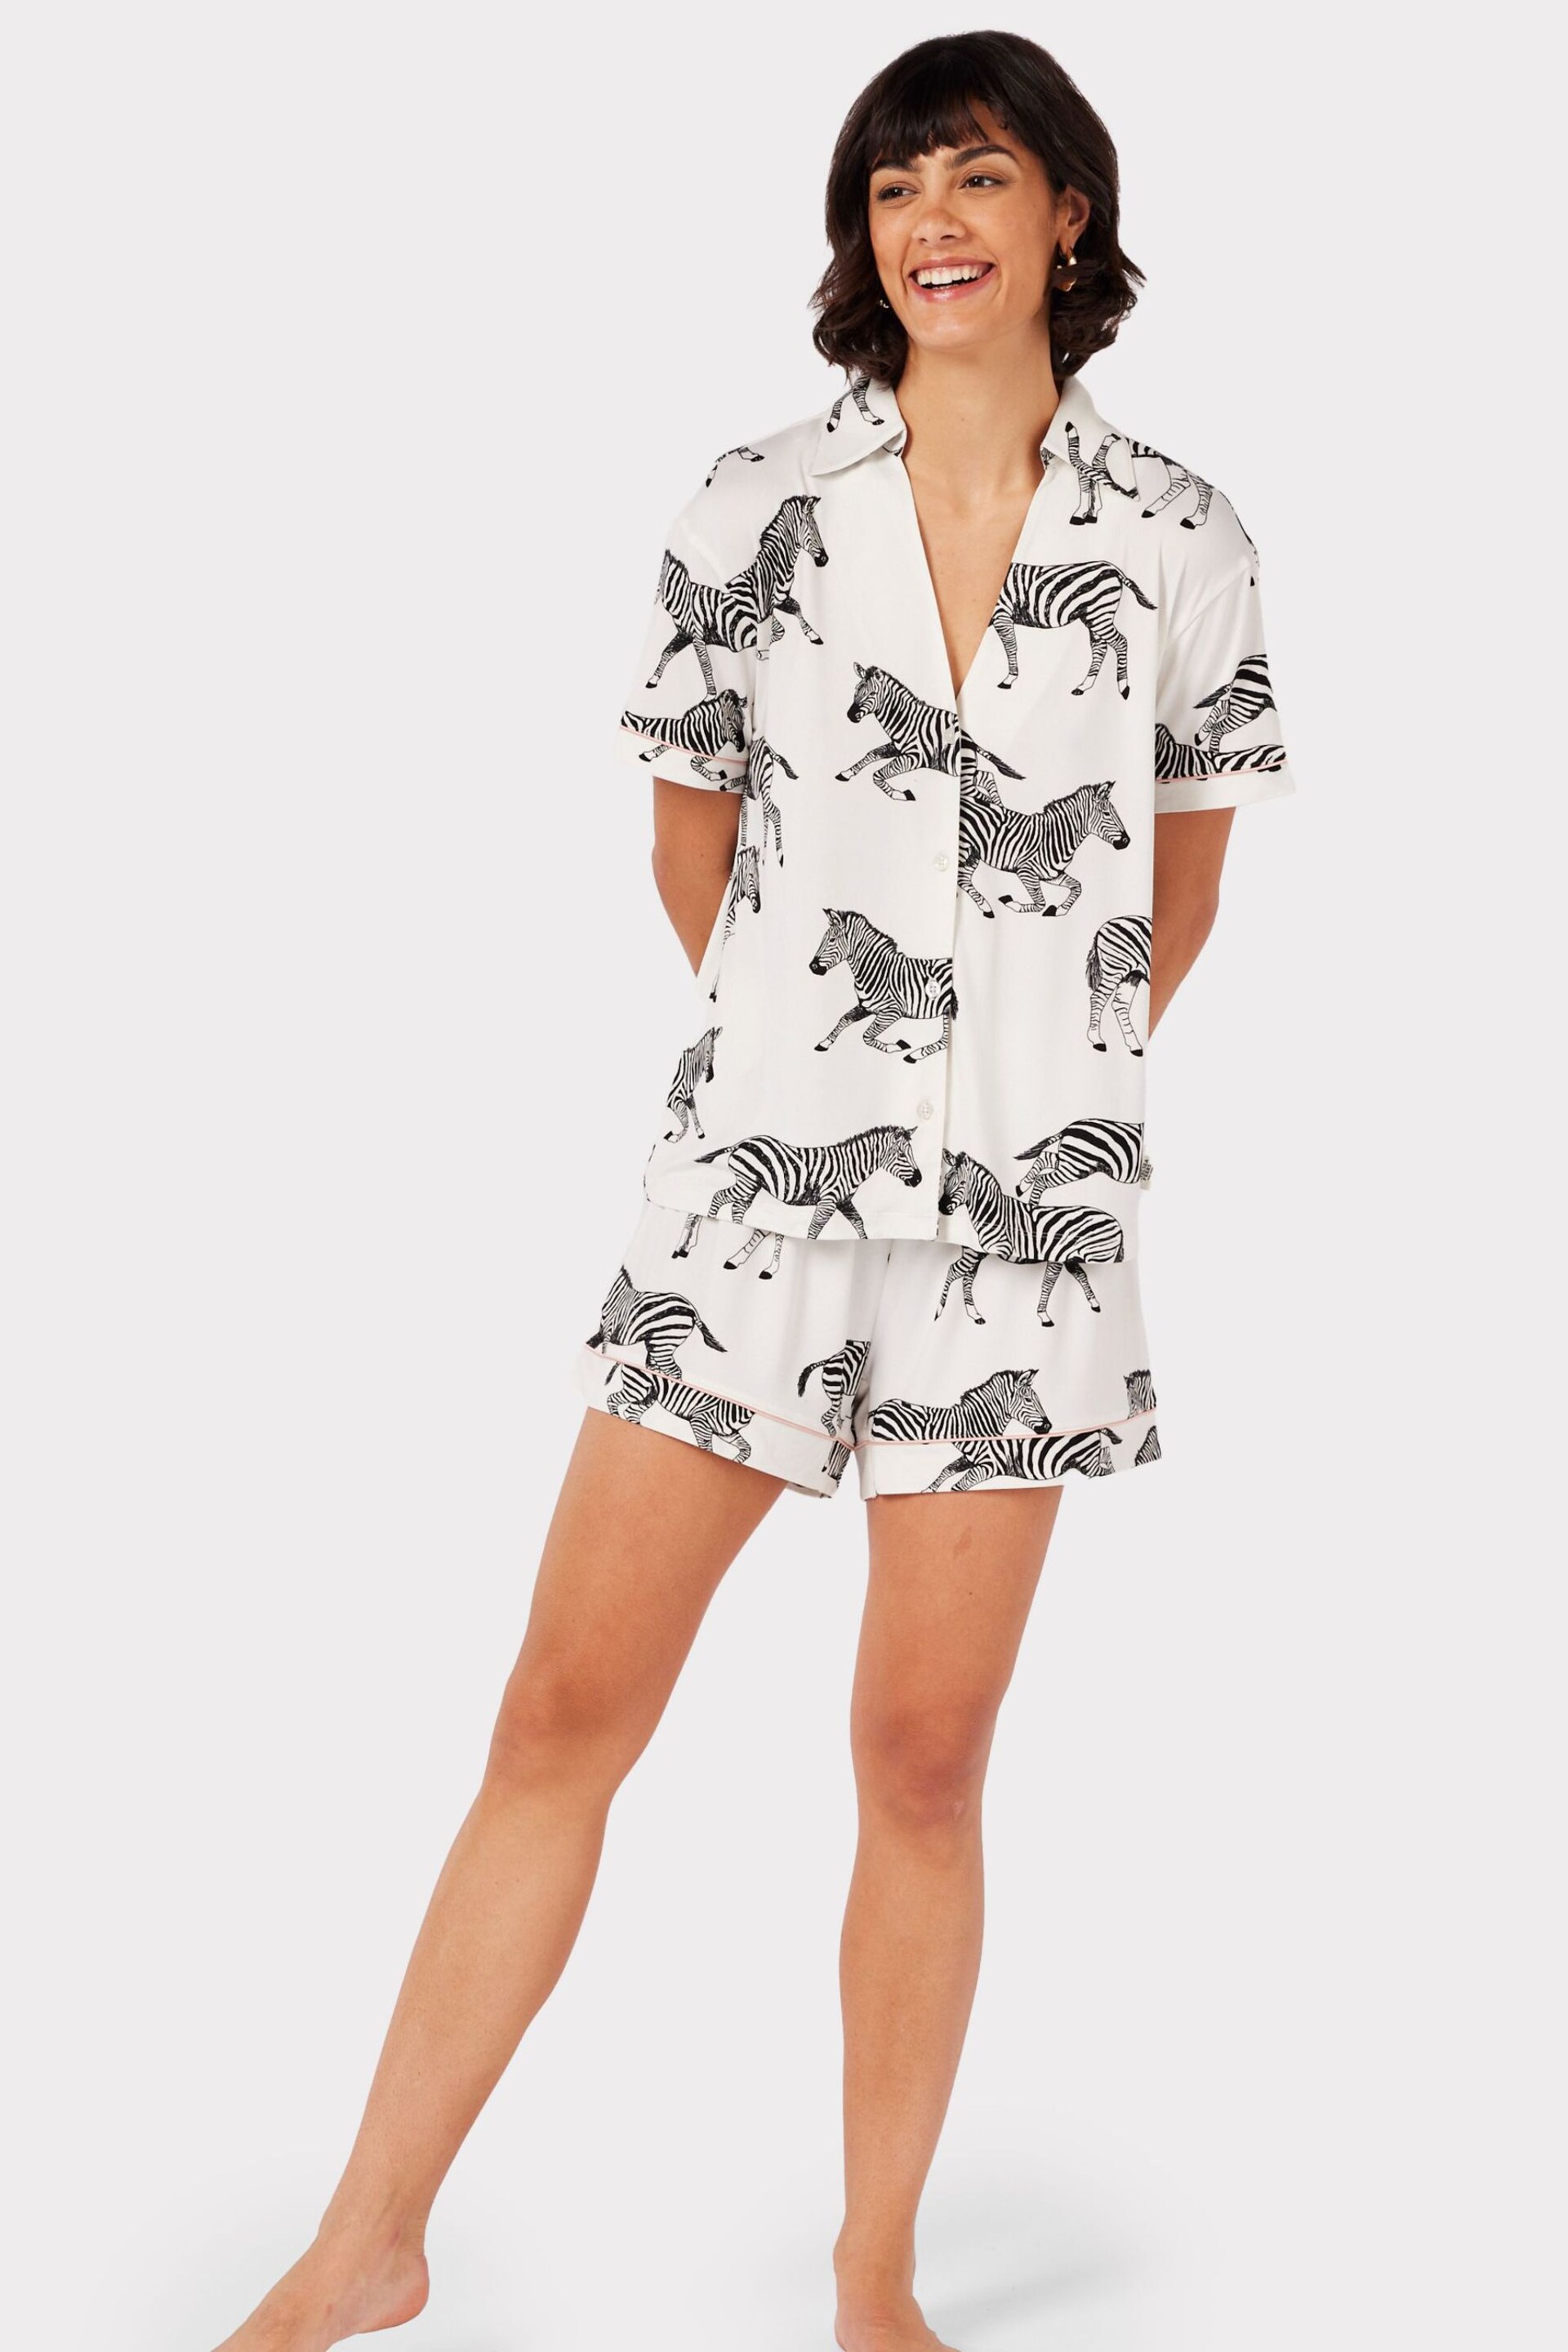 Chelsea Peers White Zebra Print V-neck Button Up Short Pyjama Set - Image 1 of 5